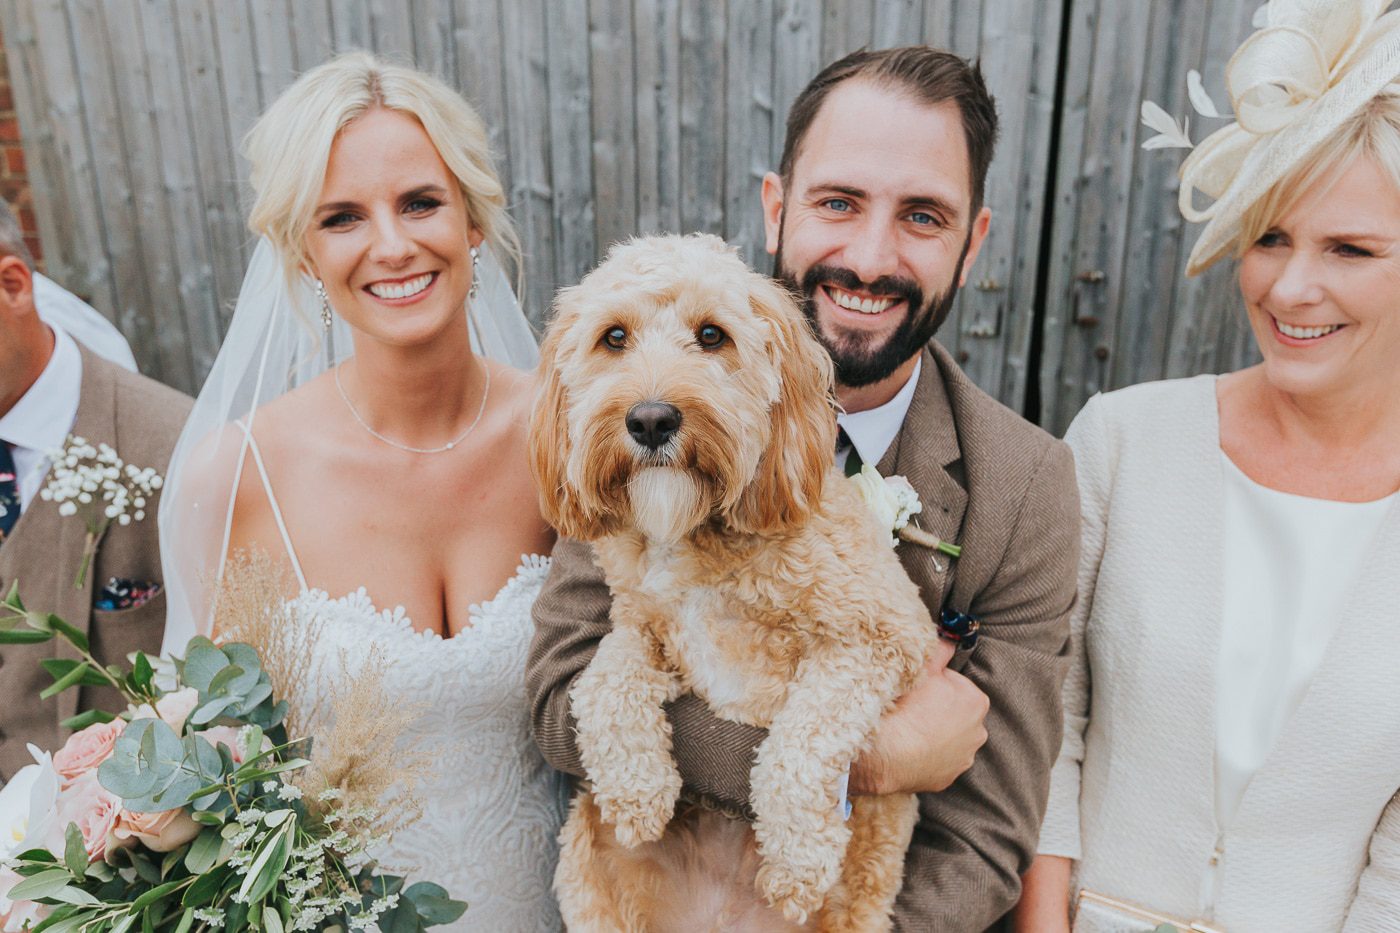 yorkshire wedding photos. cute dog at wedding at woolas barn